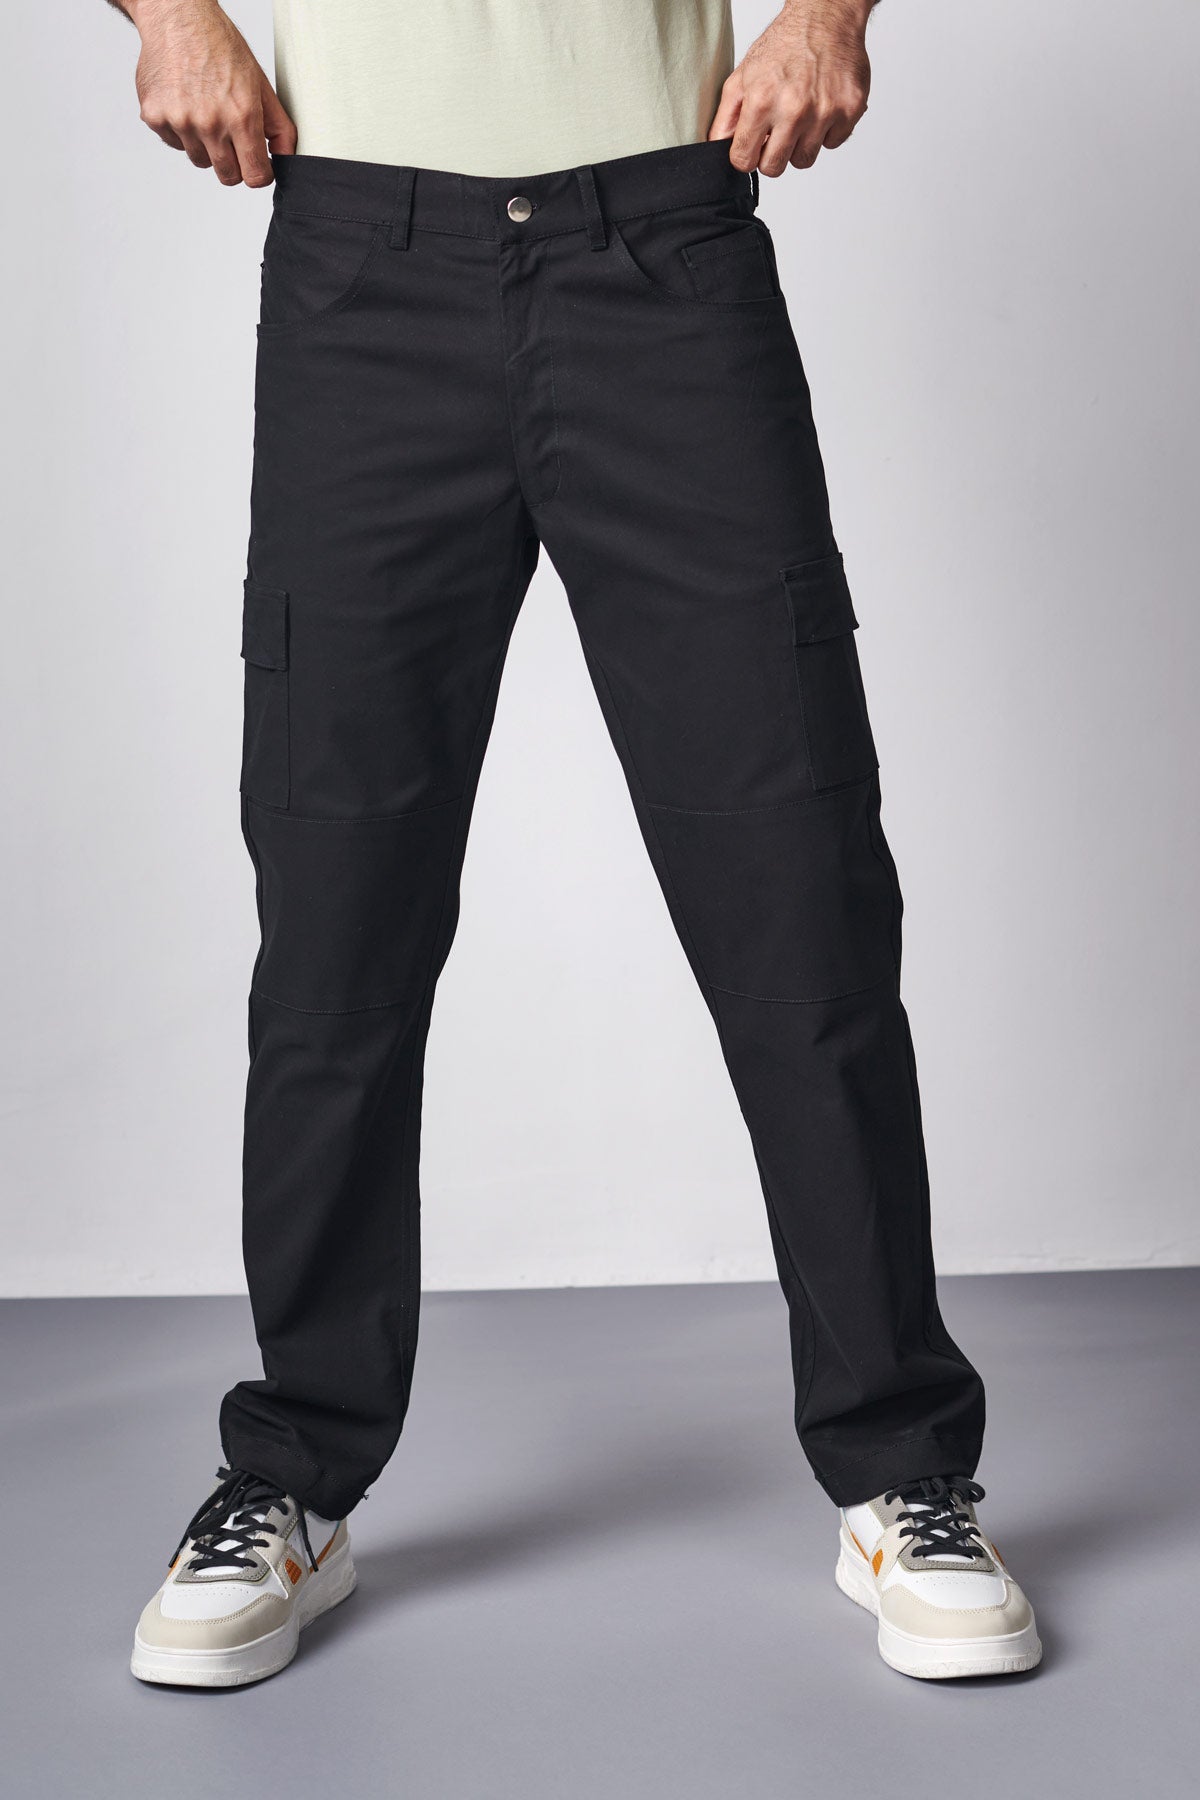 Carhartt WIP JET PANT - Cargo trousers - black rinsed/black - Zalando.ie